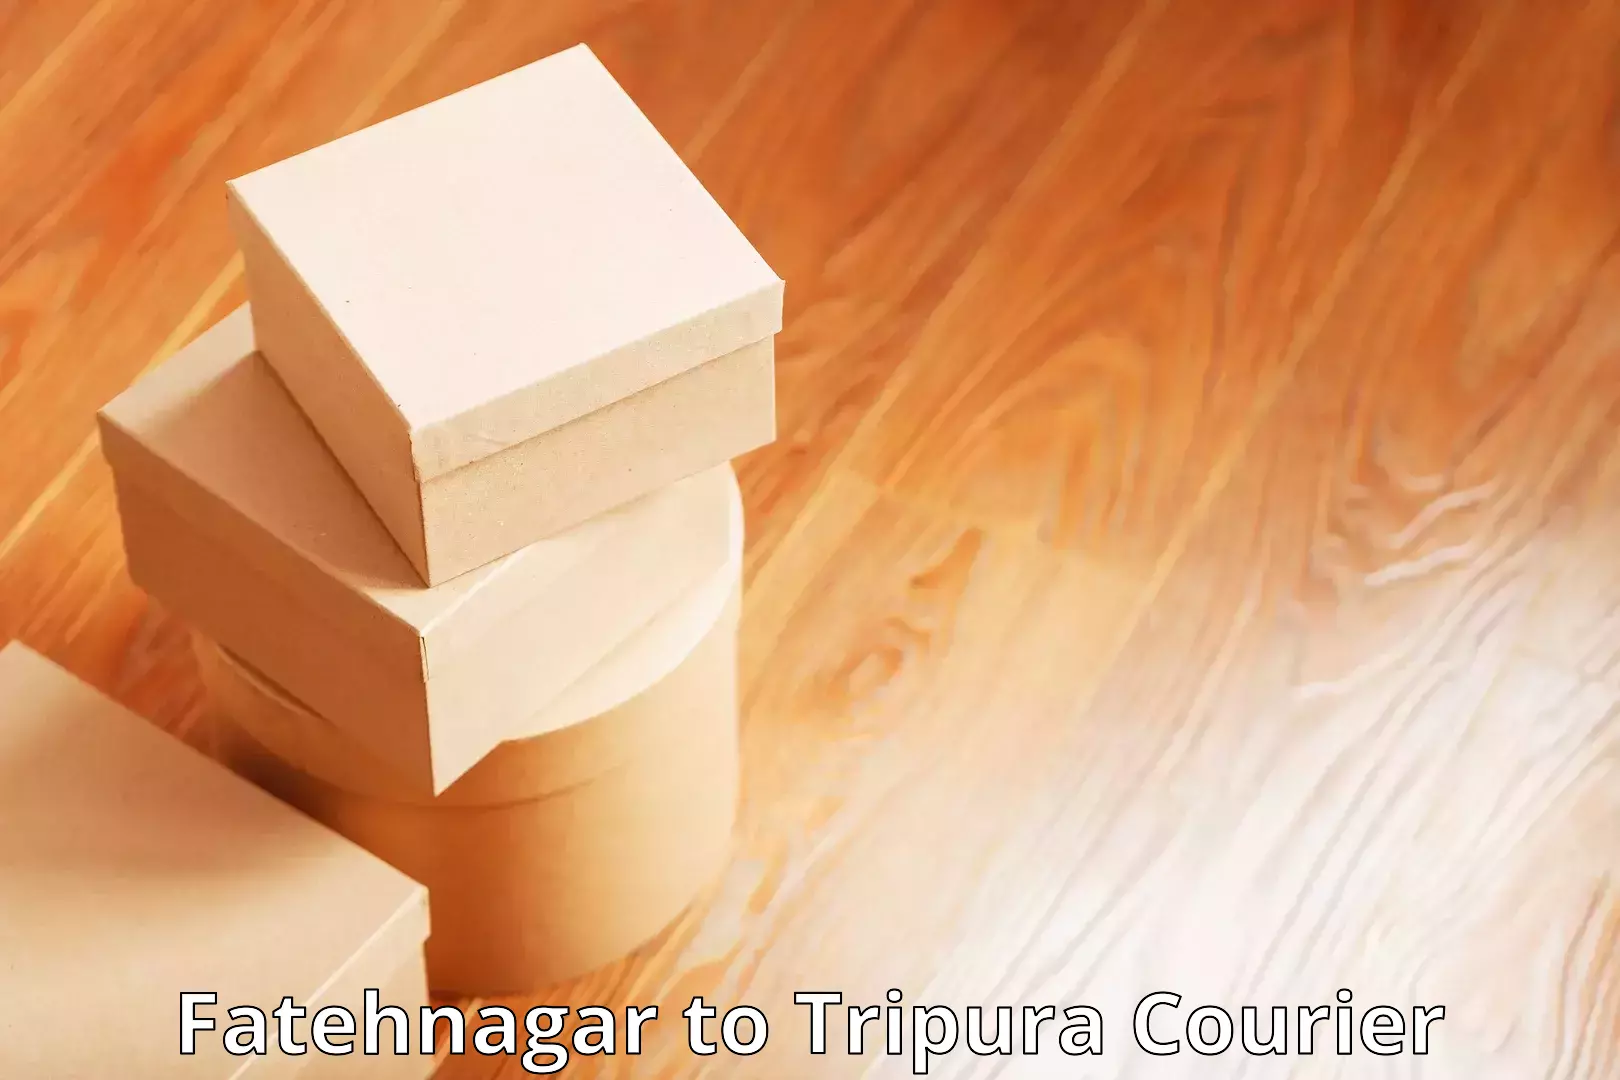 Full-service courier options Fatehnagar to Udaipur Tripura